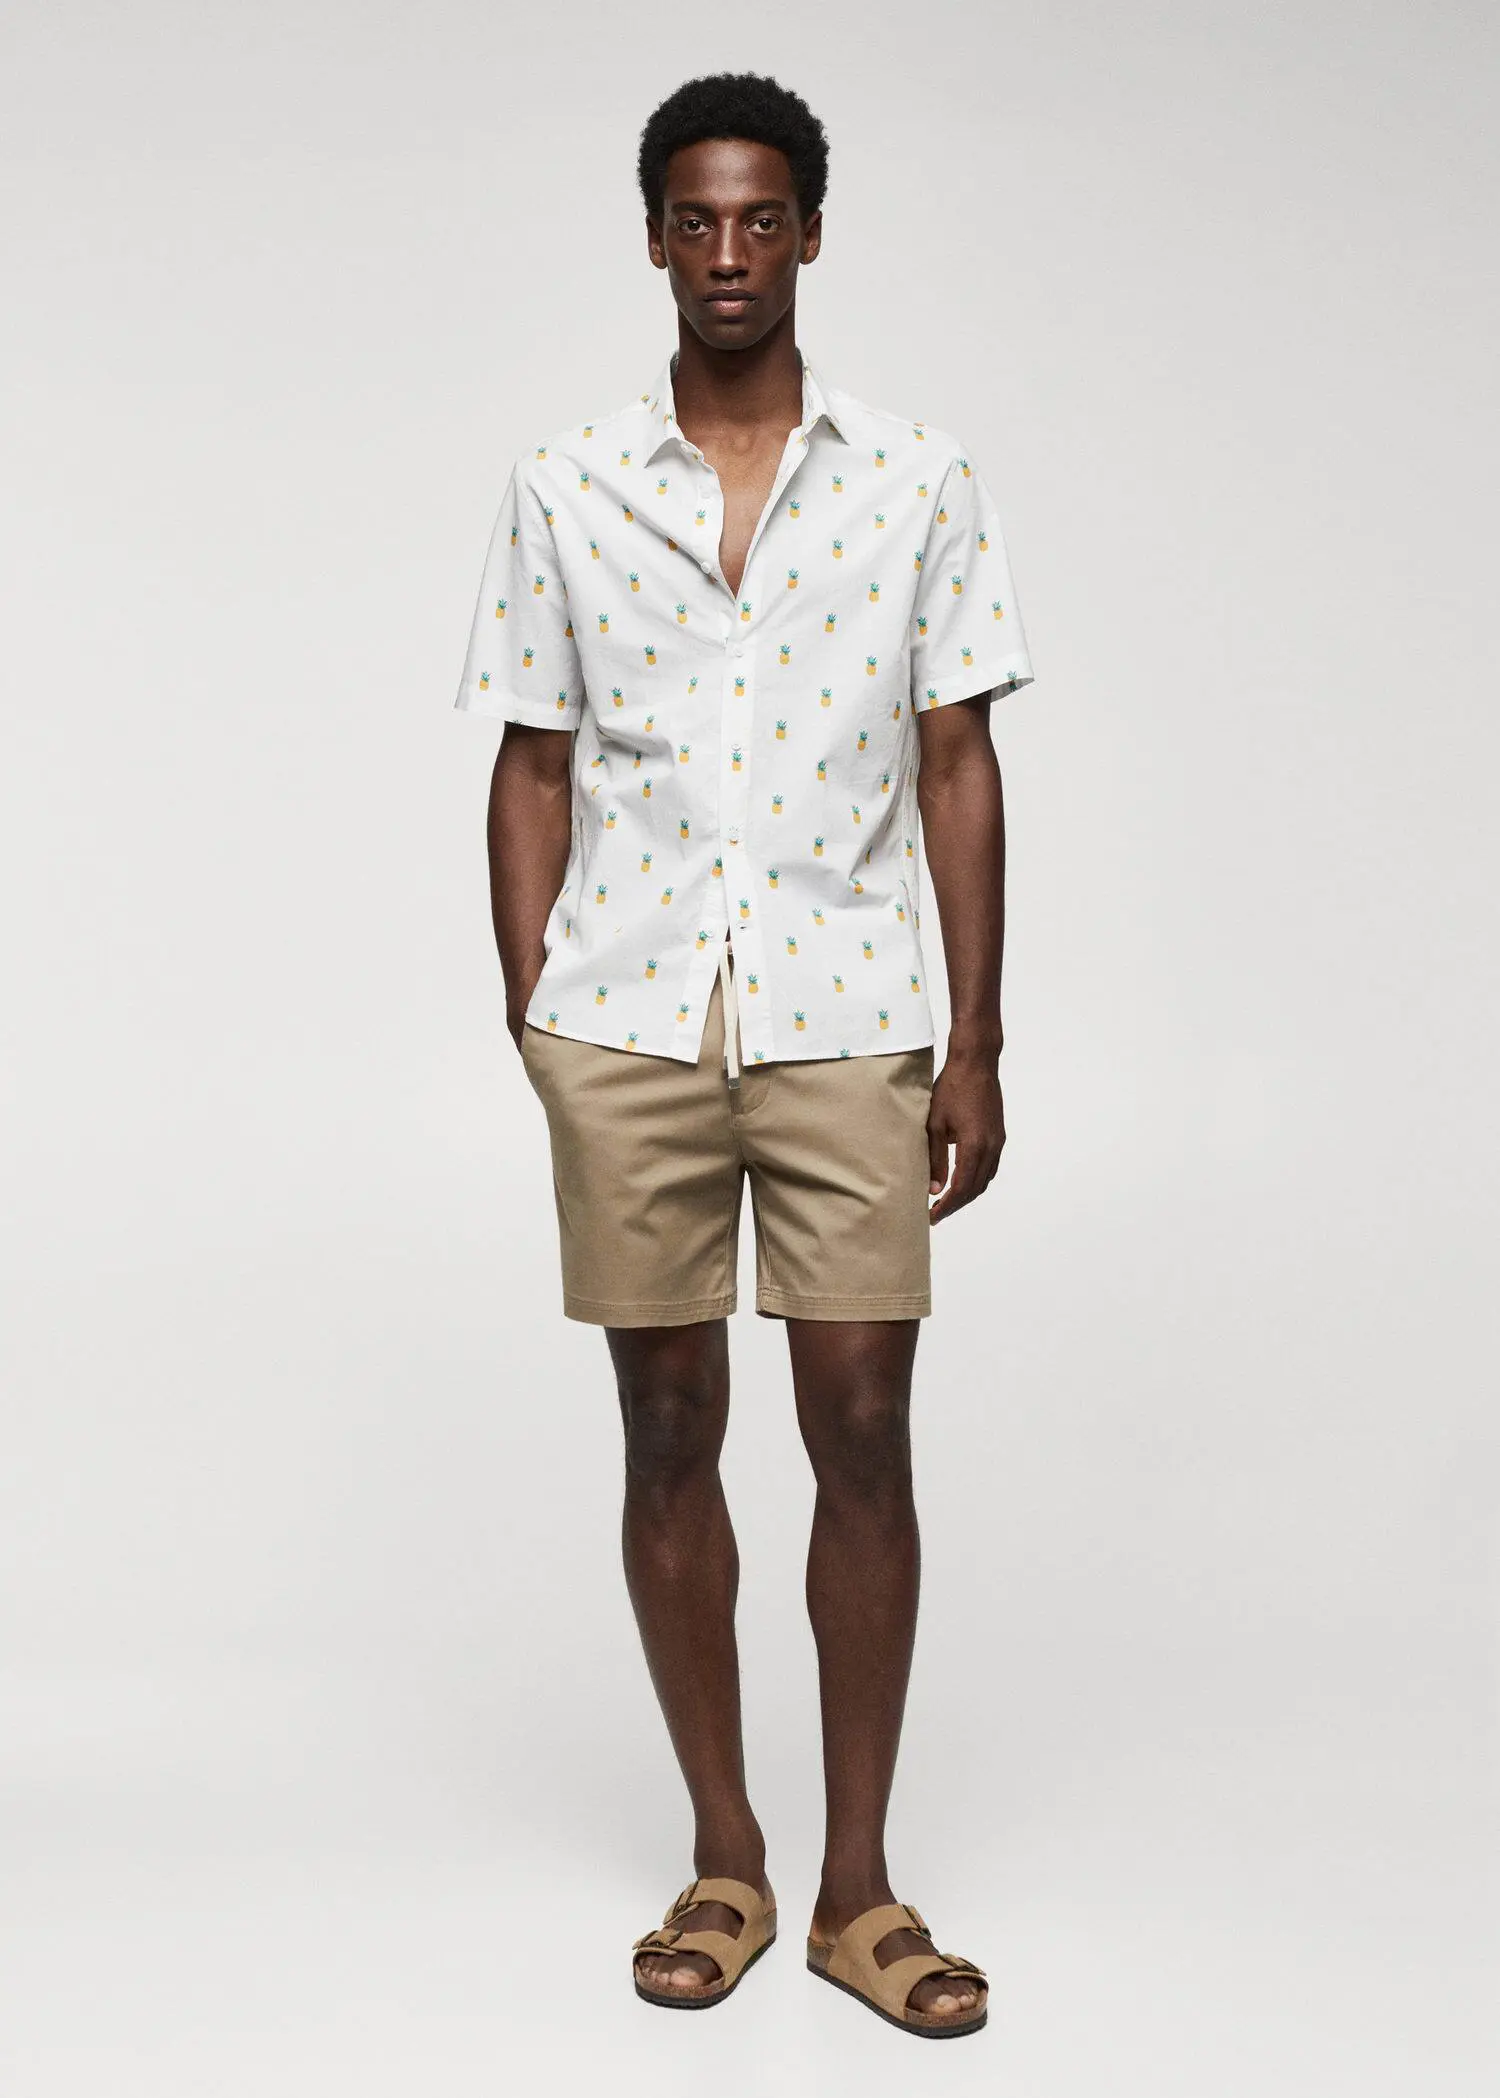 Mango 100% cotton shirt with pineapple print. 2